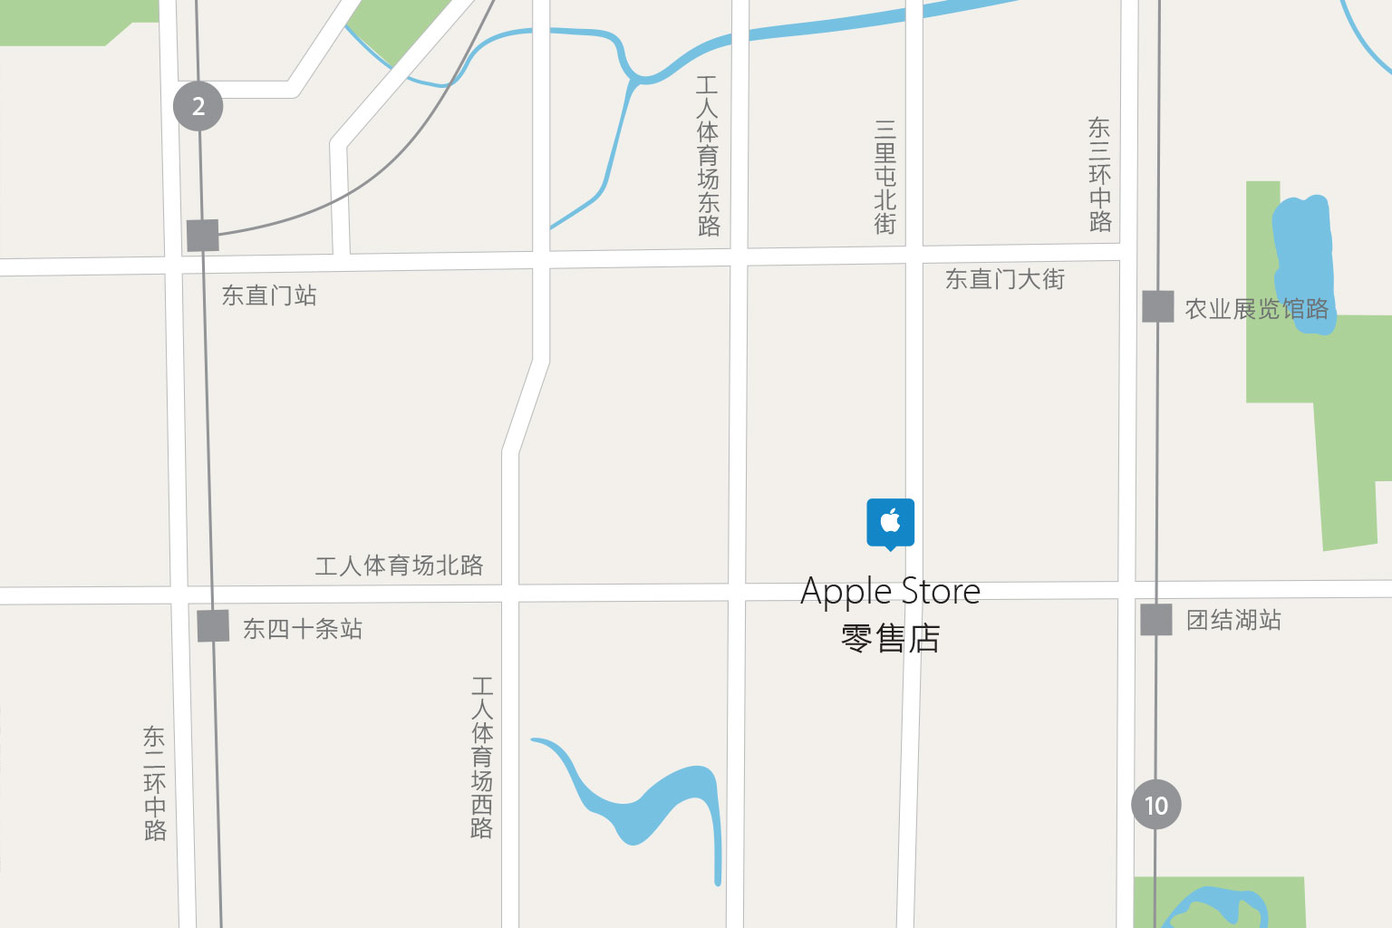 三里屯 Apple Store 零售店